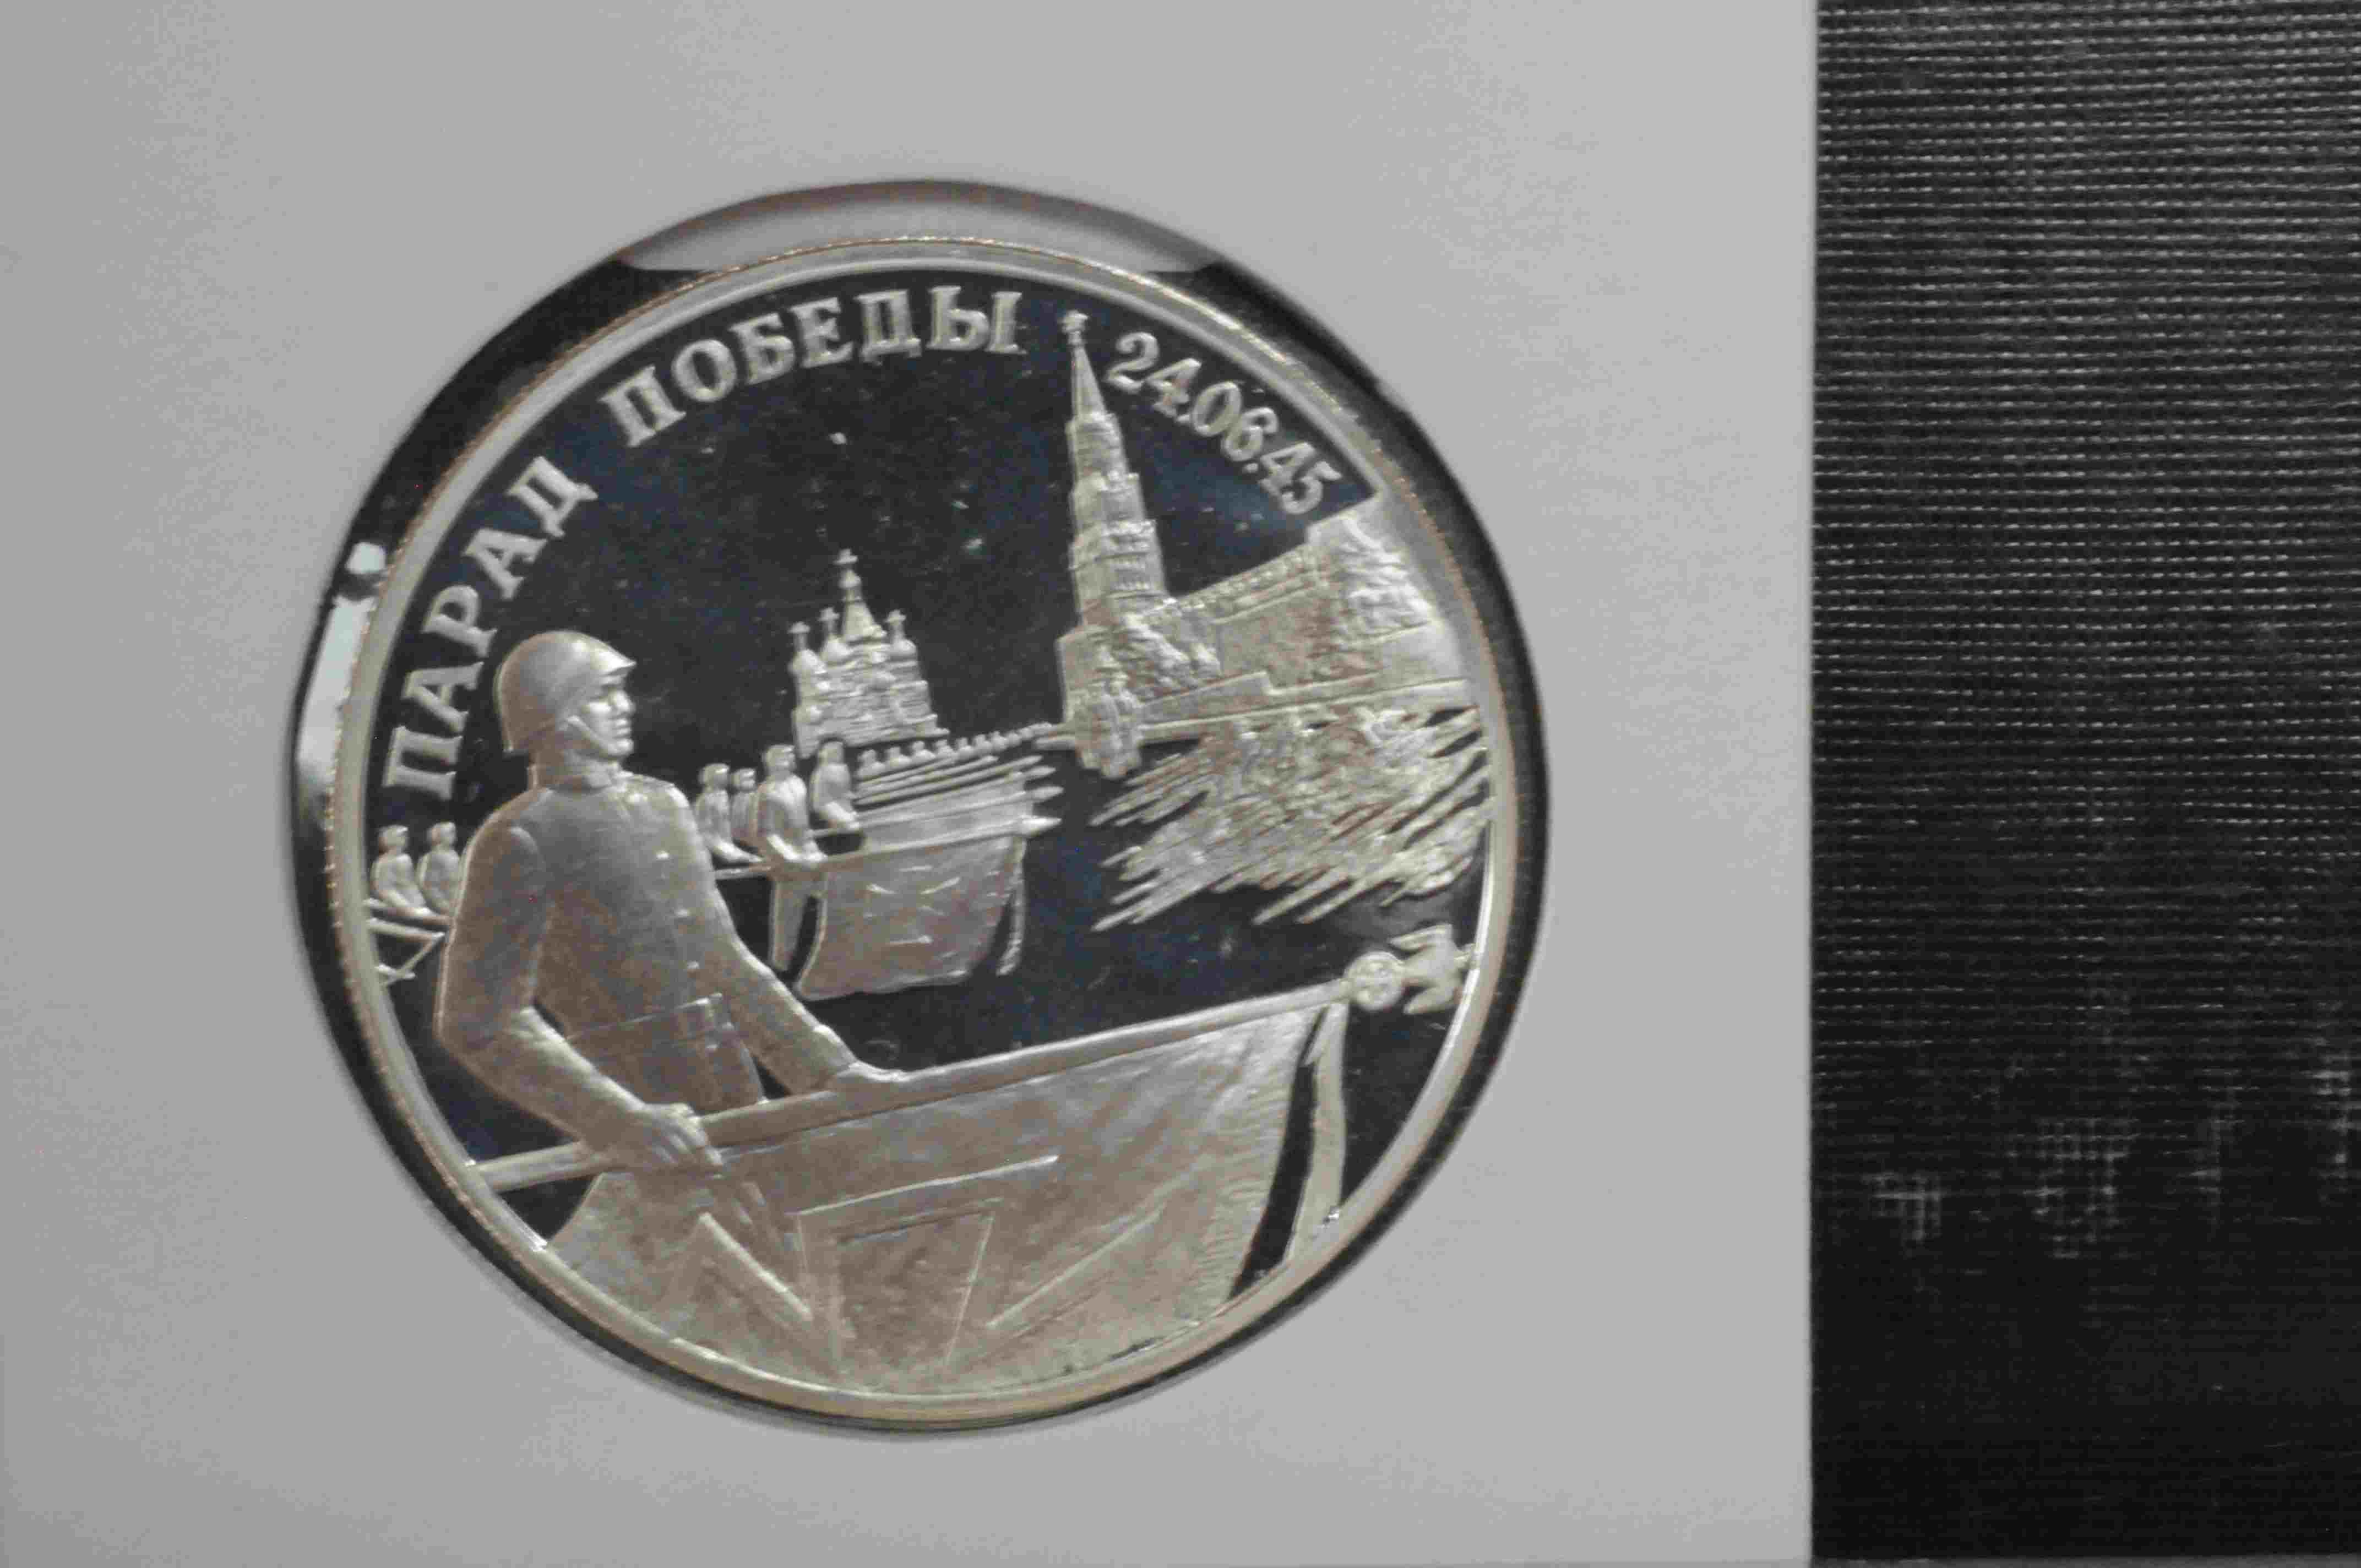 Russland 1995 jub 2 rubel sølv proof